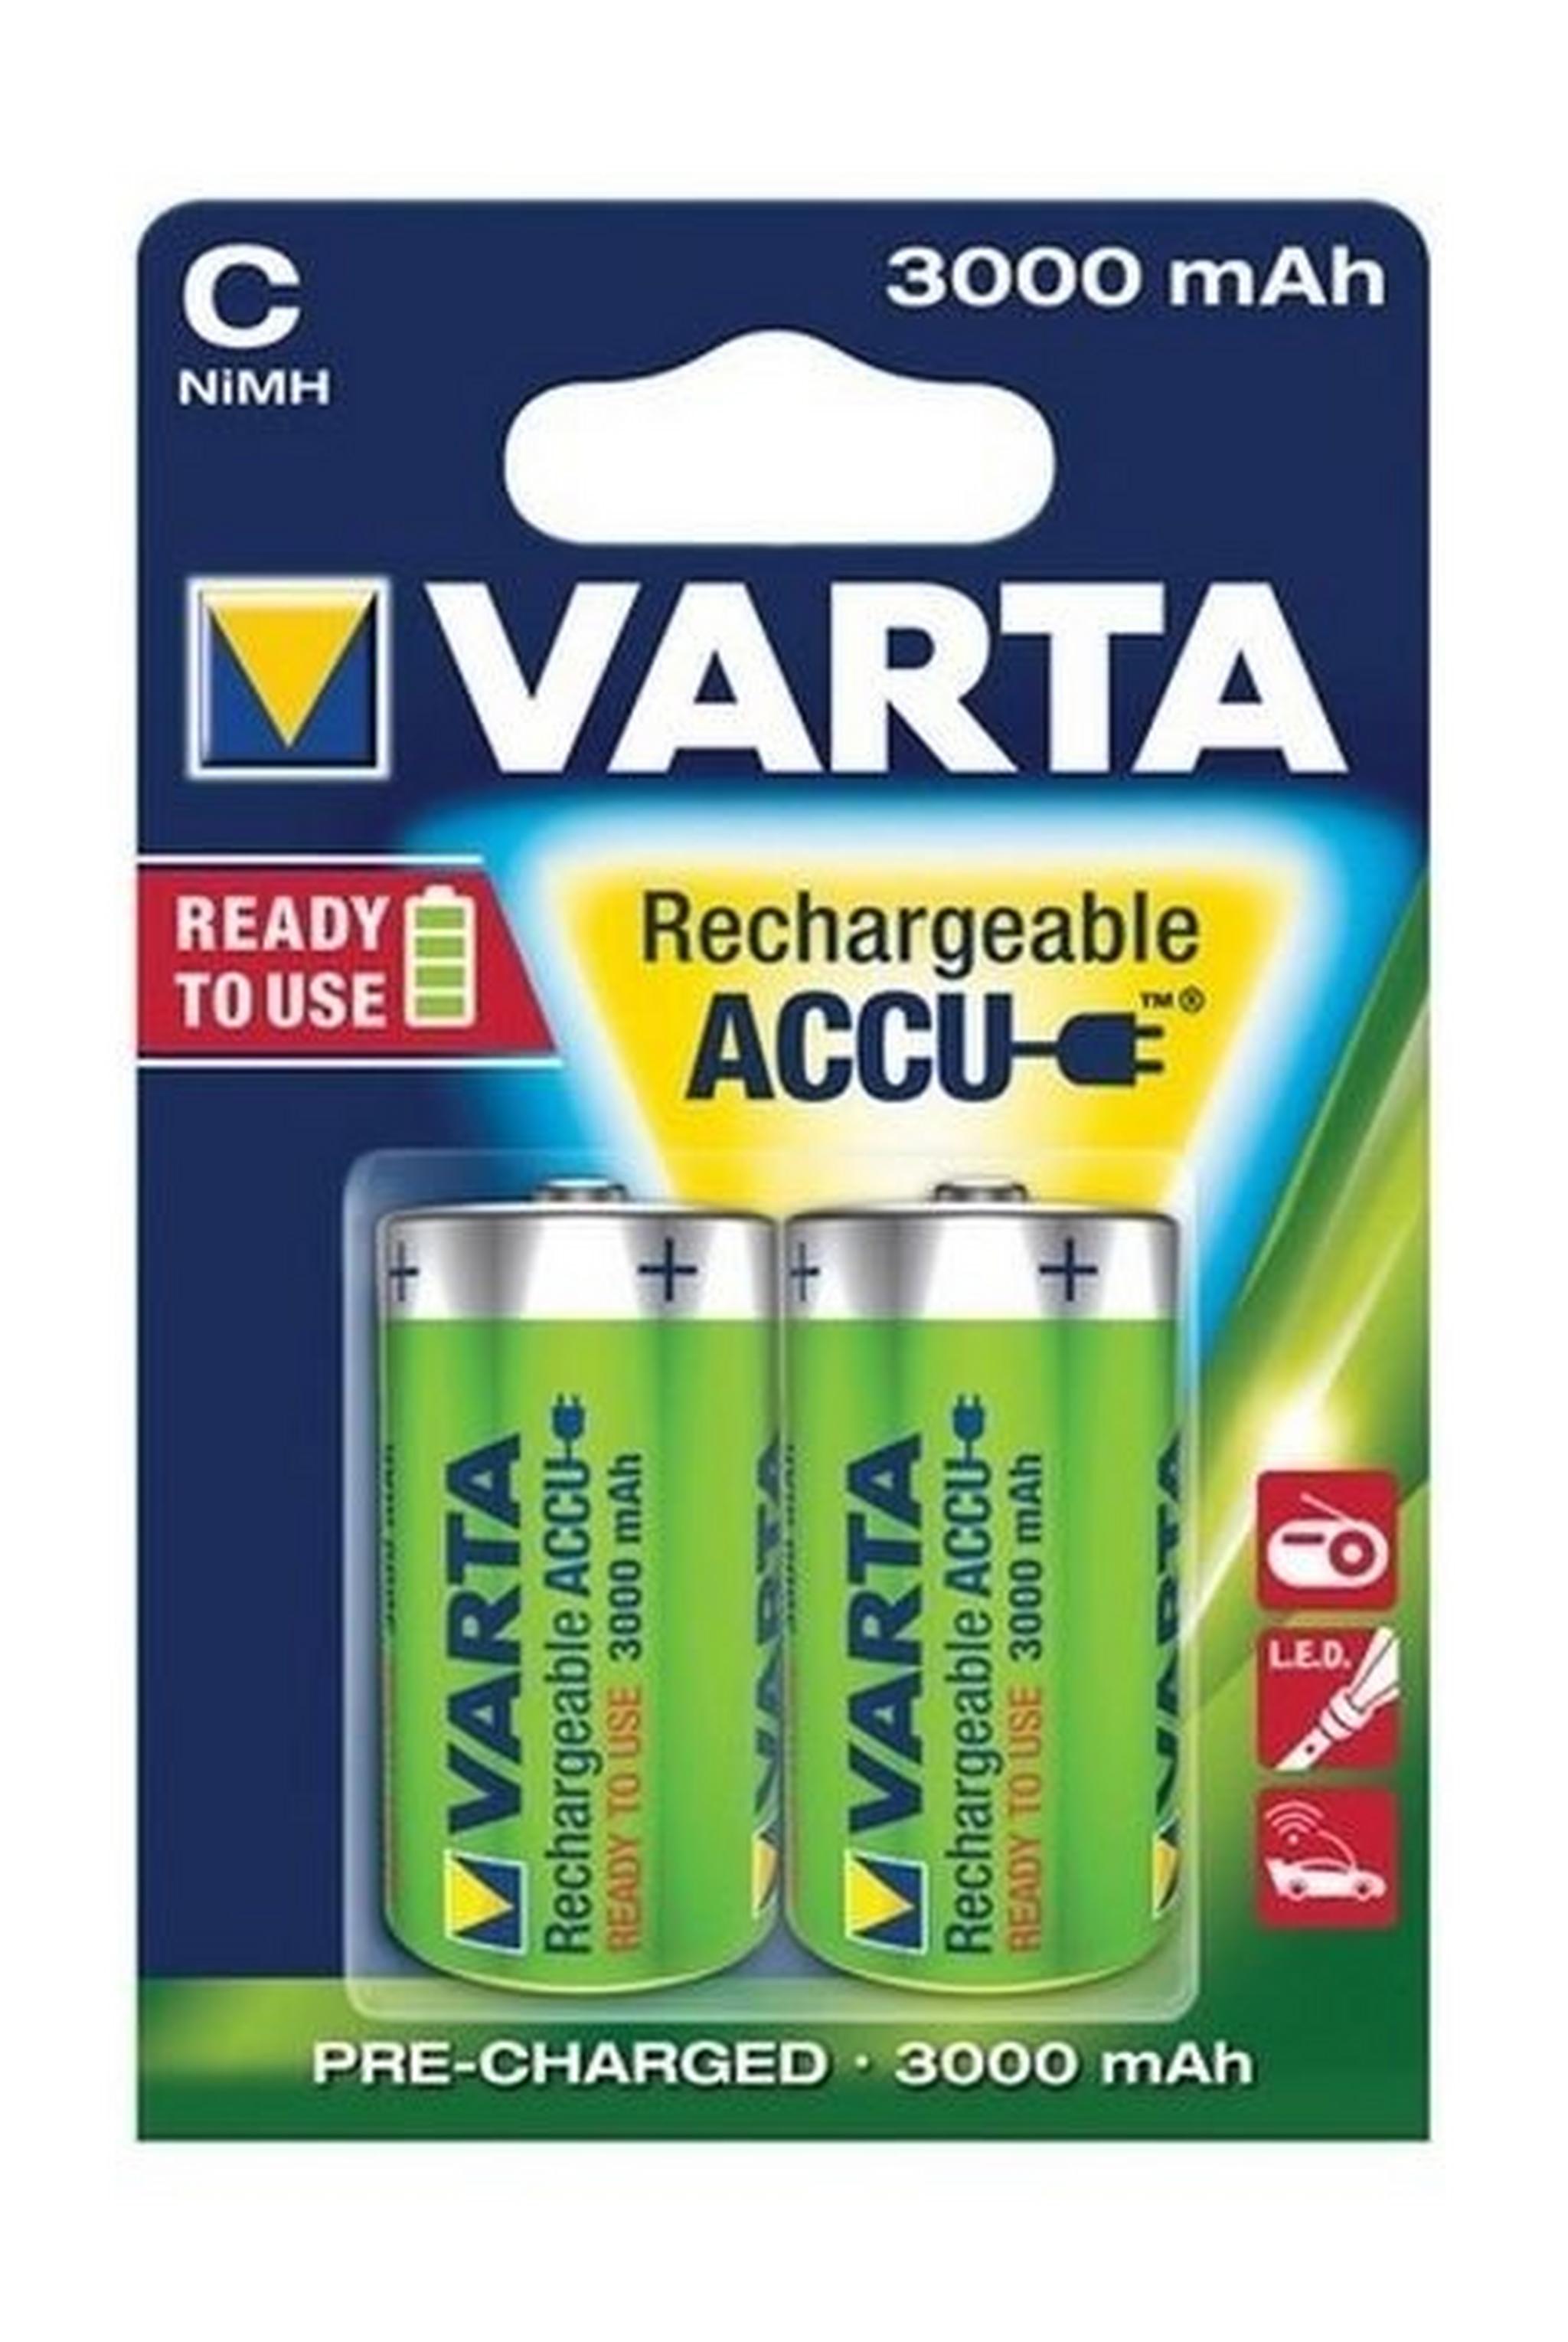 Varta Rechargeable ACCU 2C Nickel-Metal Battery 3000 mAh